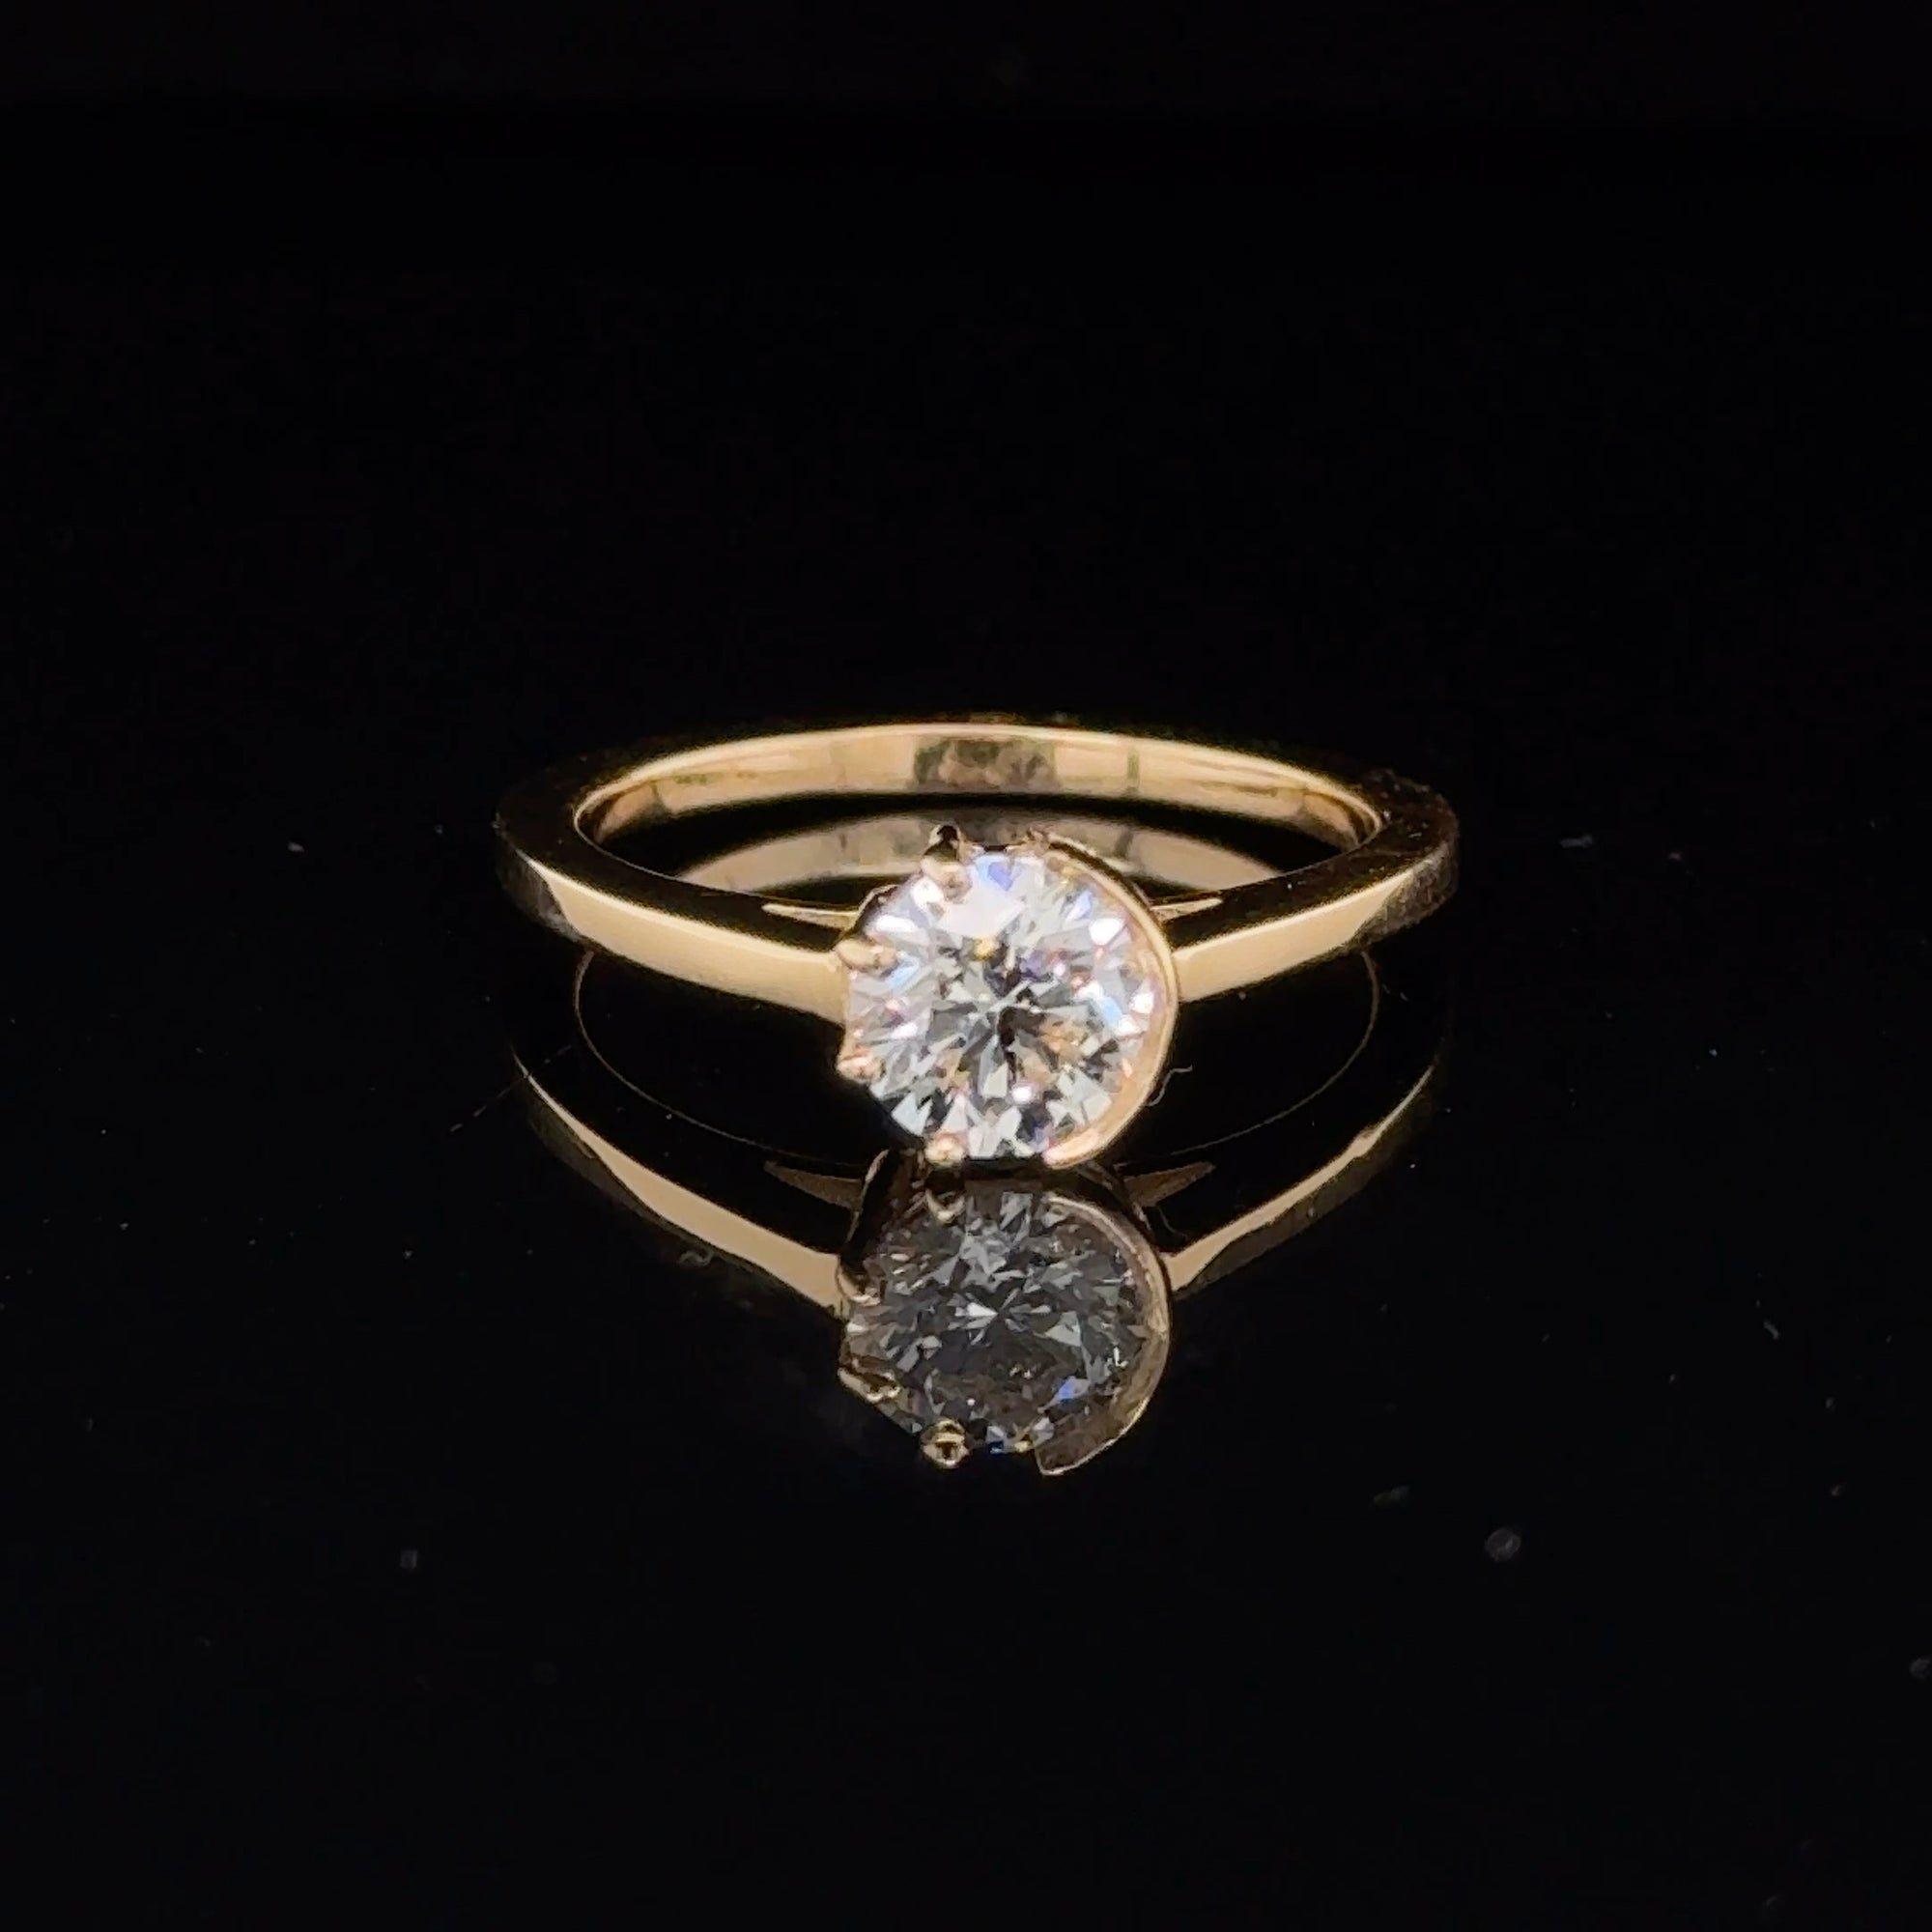 18K Yellow Gold Diamond Engagement Ring